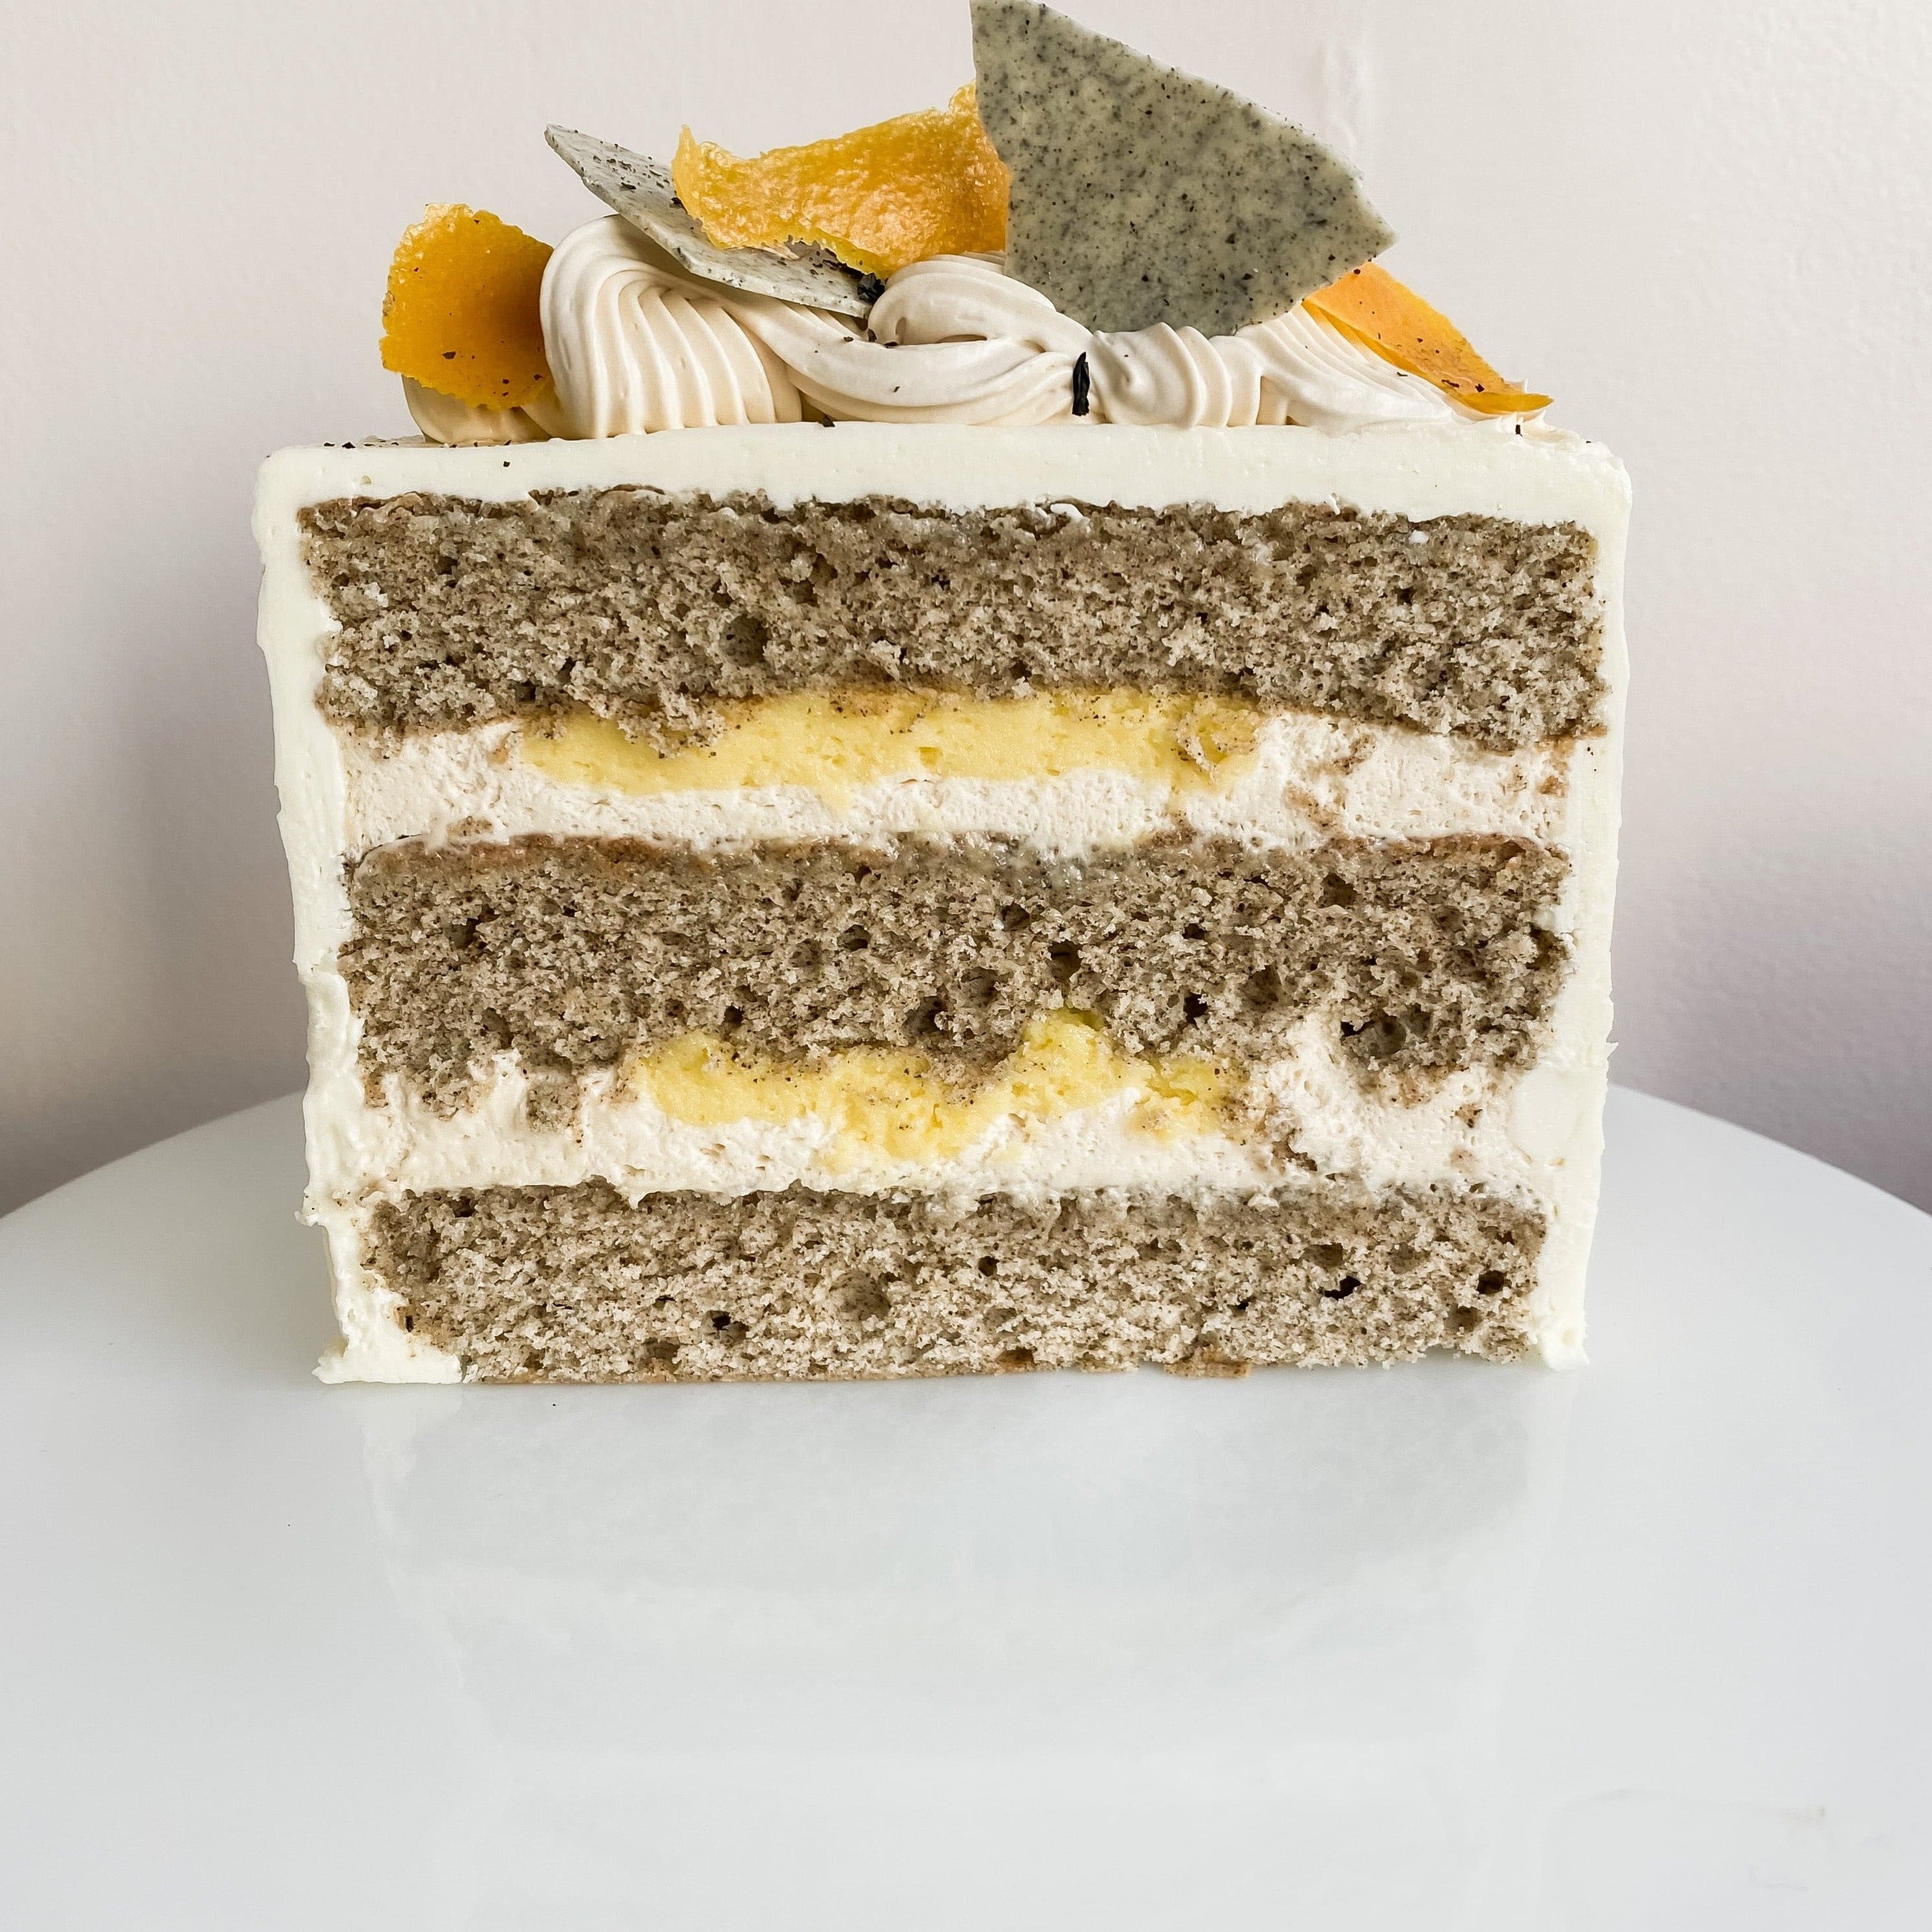 Earl grey and orange mounted cake